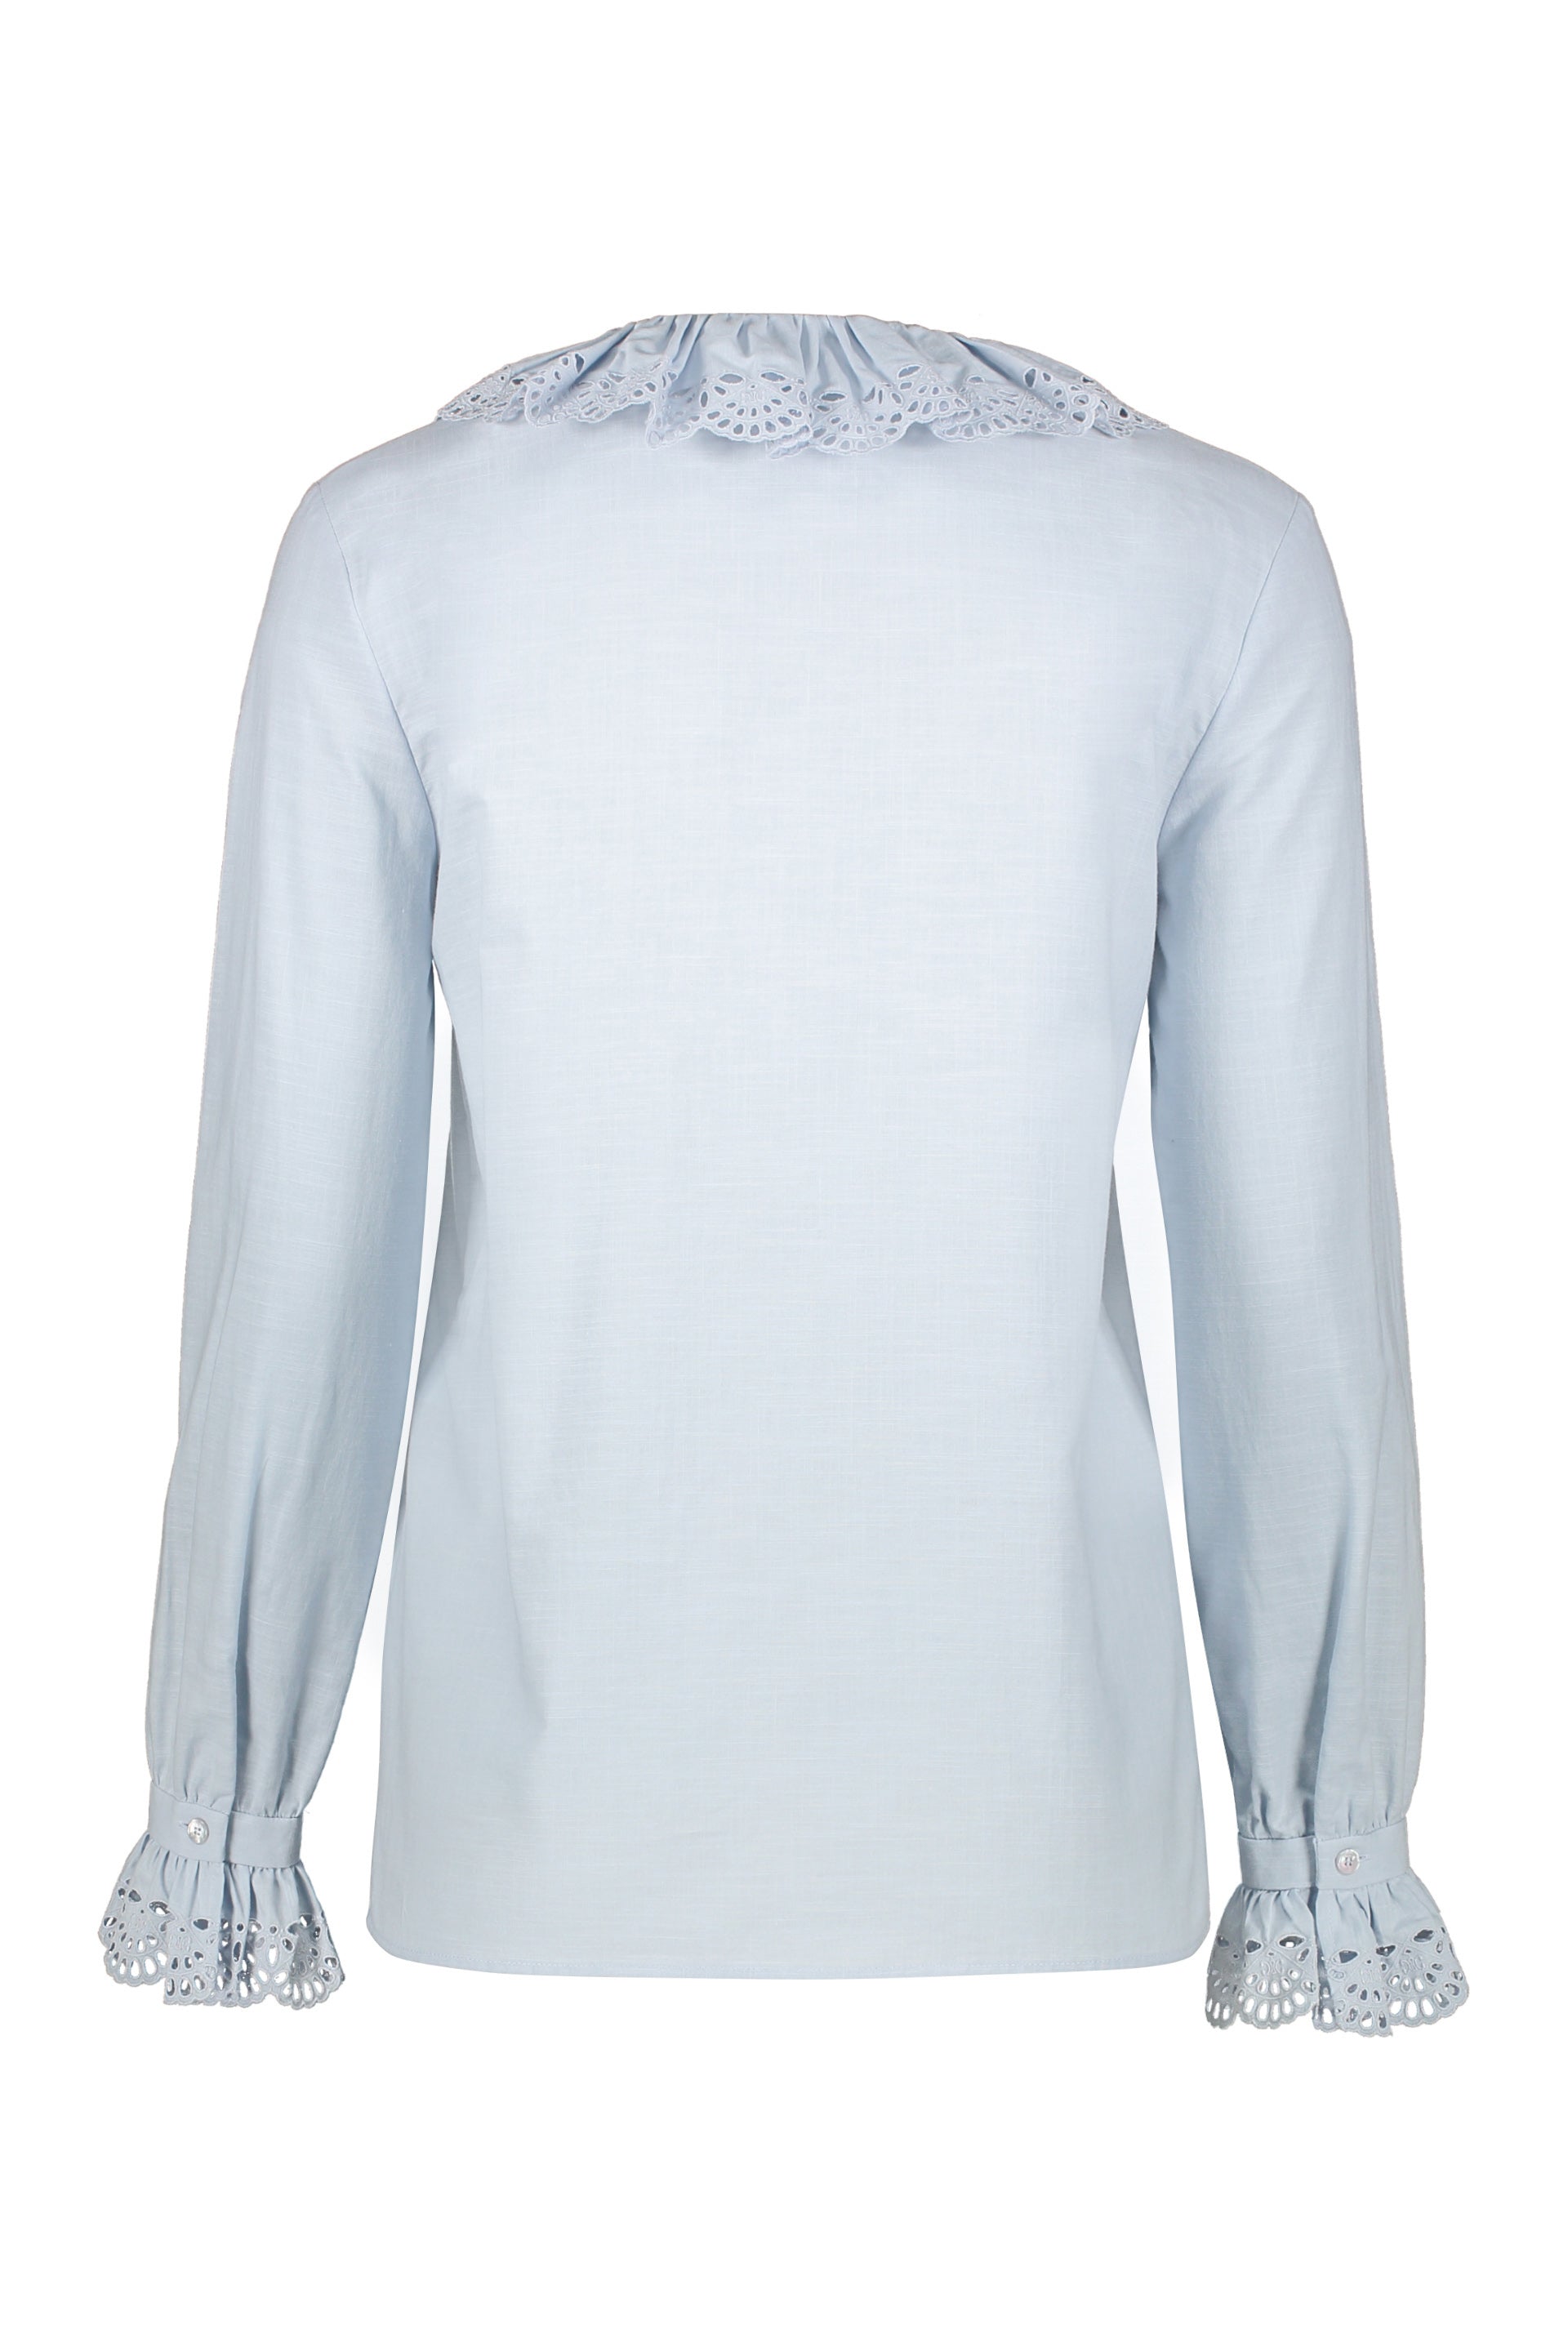 CELINE-OUTLET-SALE-Embroidered-cotton-blouse-Blusen-34-ARCHIVE-COLLECTION-2.jpg